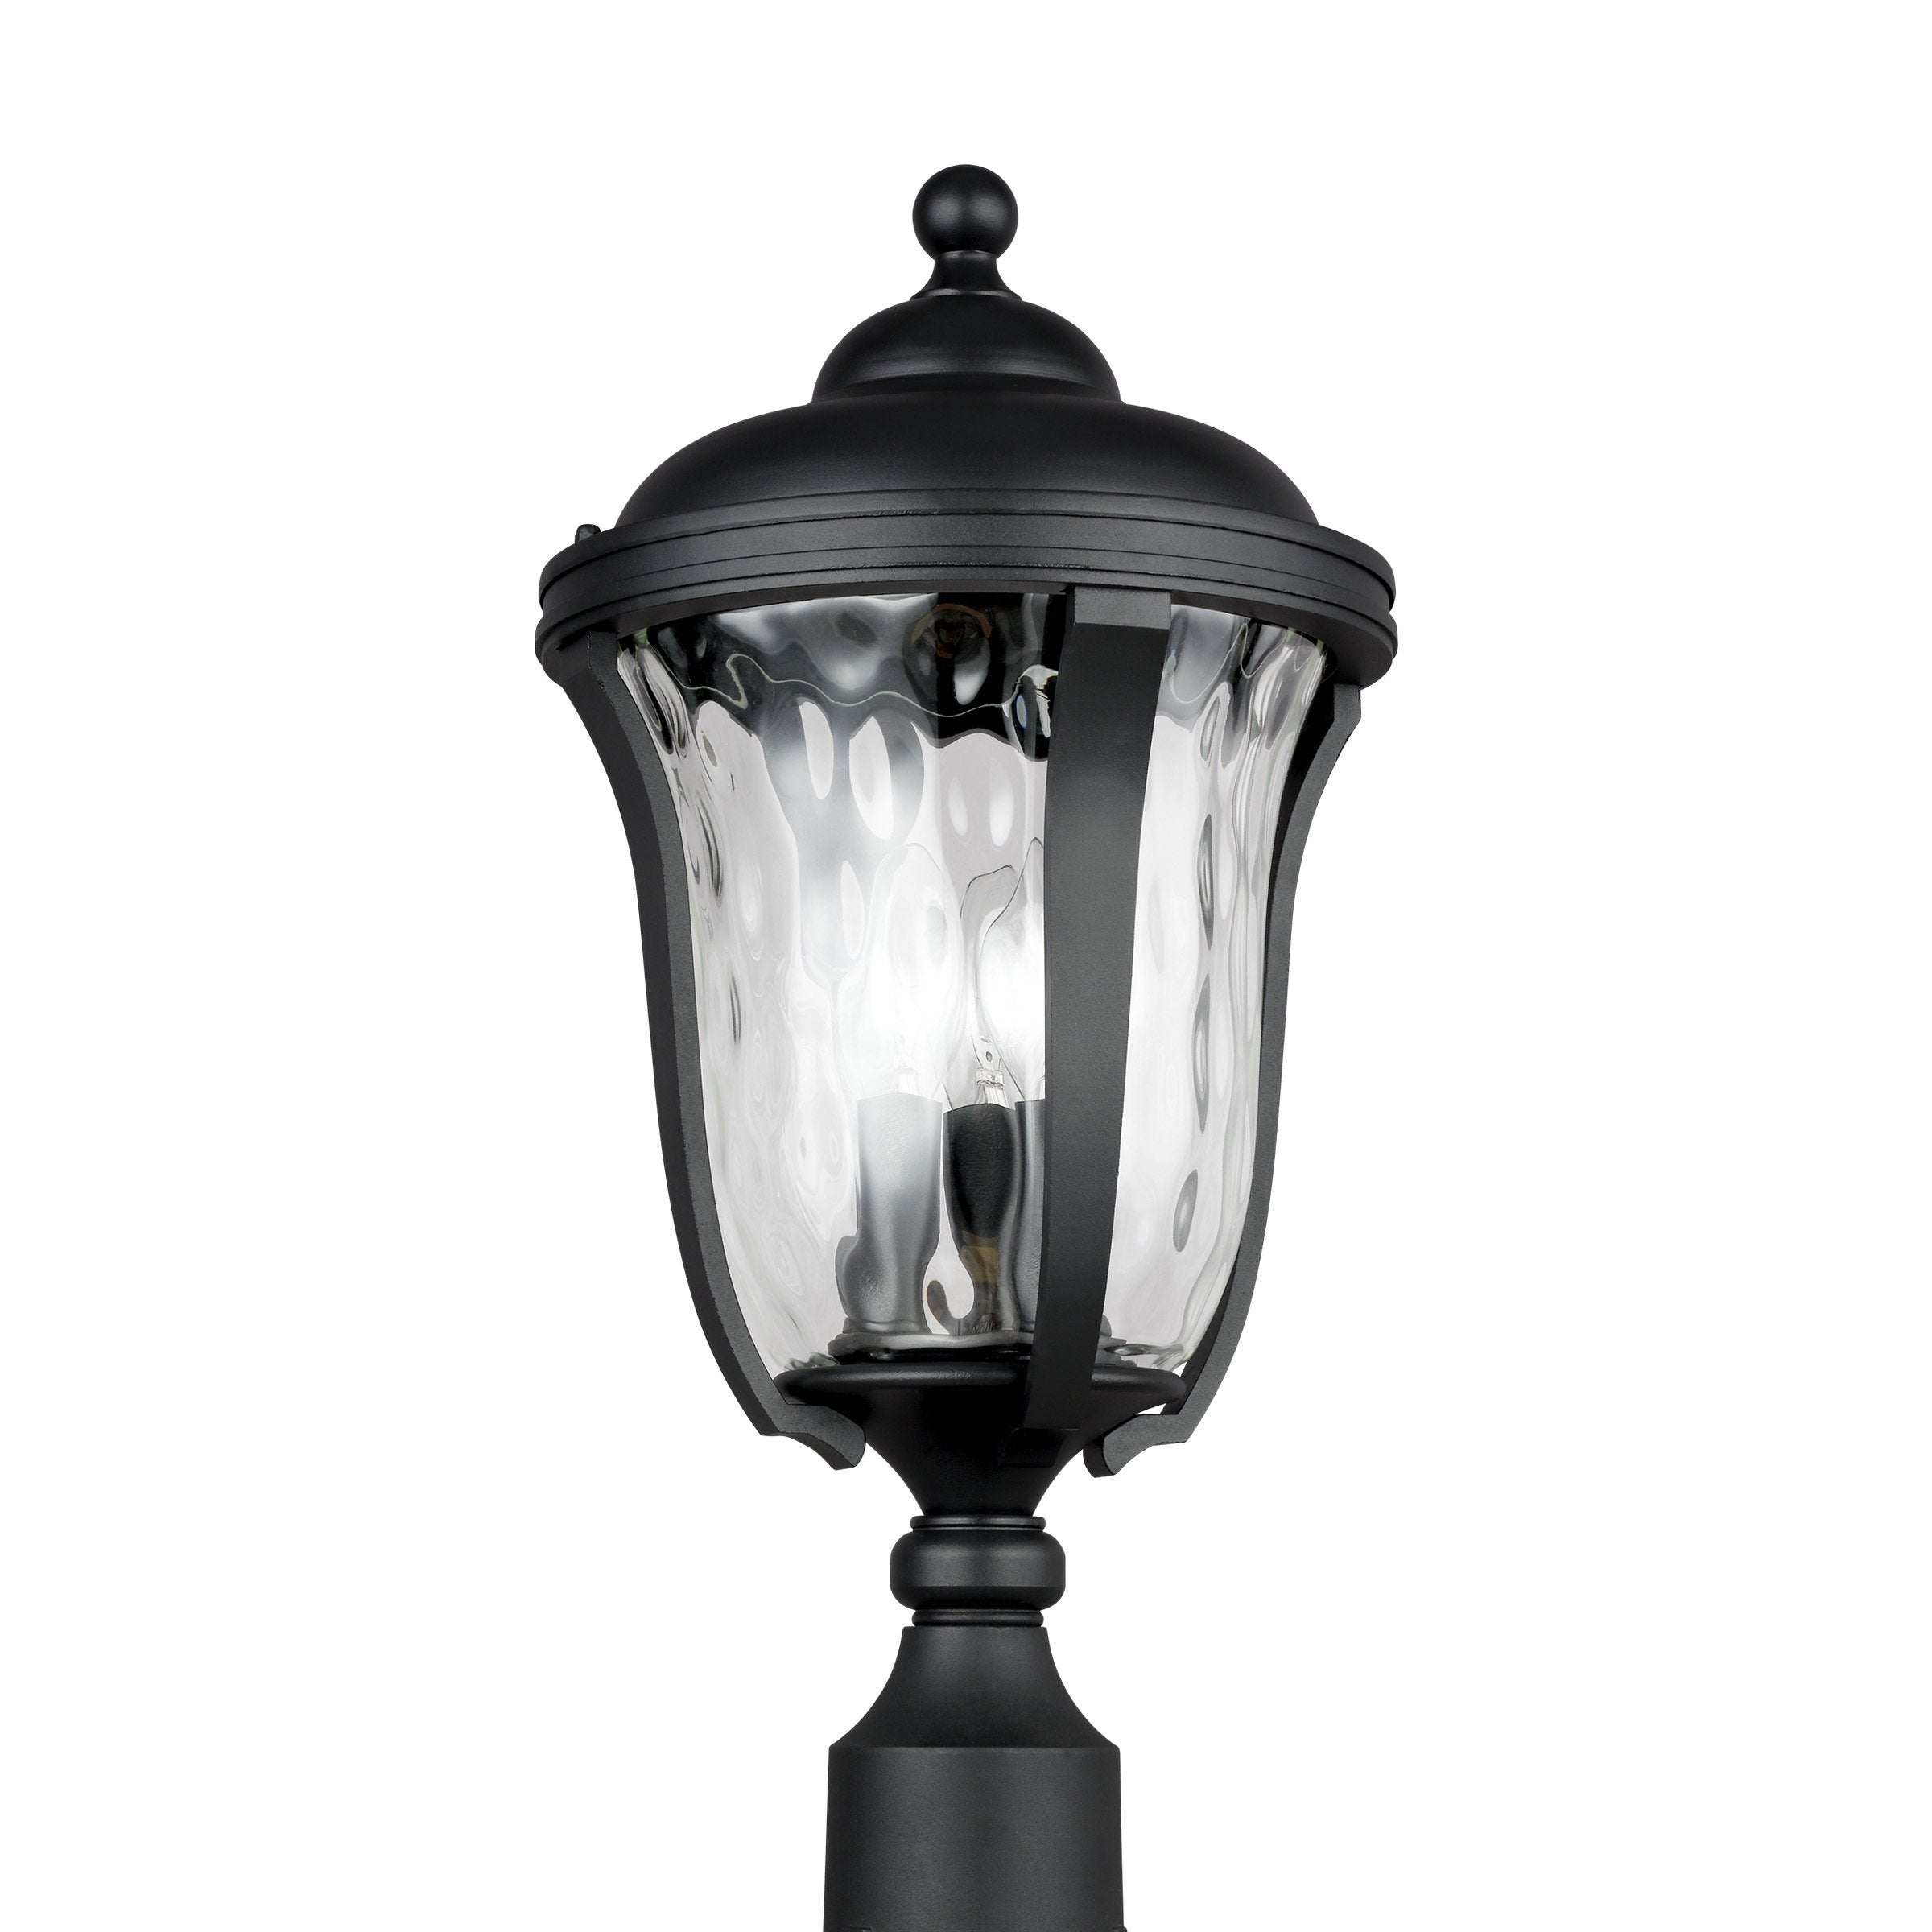 Perrywood Three Light Outdoor Post Lantern - Black Outdoor Sea Gull Lighting 